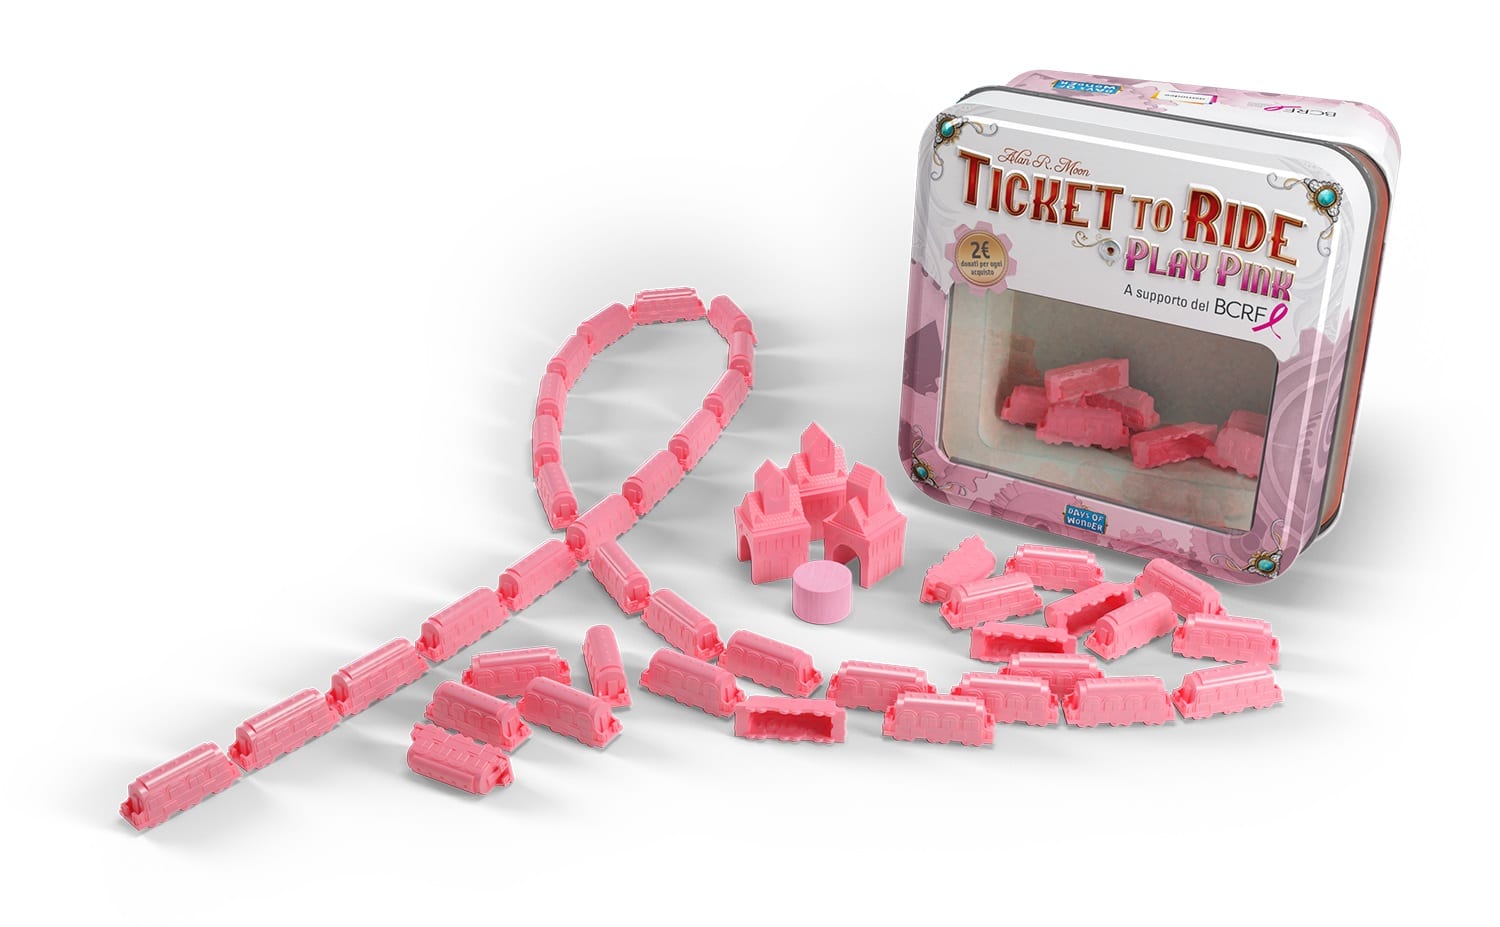 Ticket to Ride Play Pink: raccolti 184.000 dollari per la ricerca thumbnail